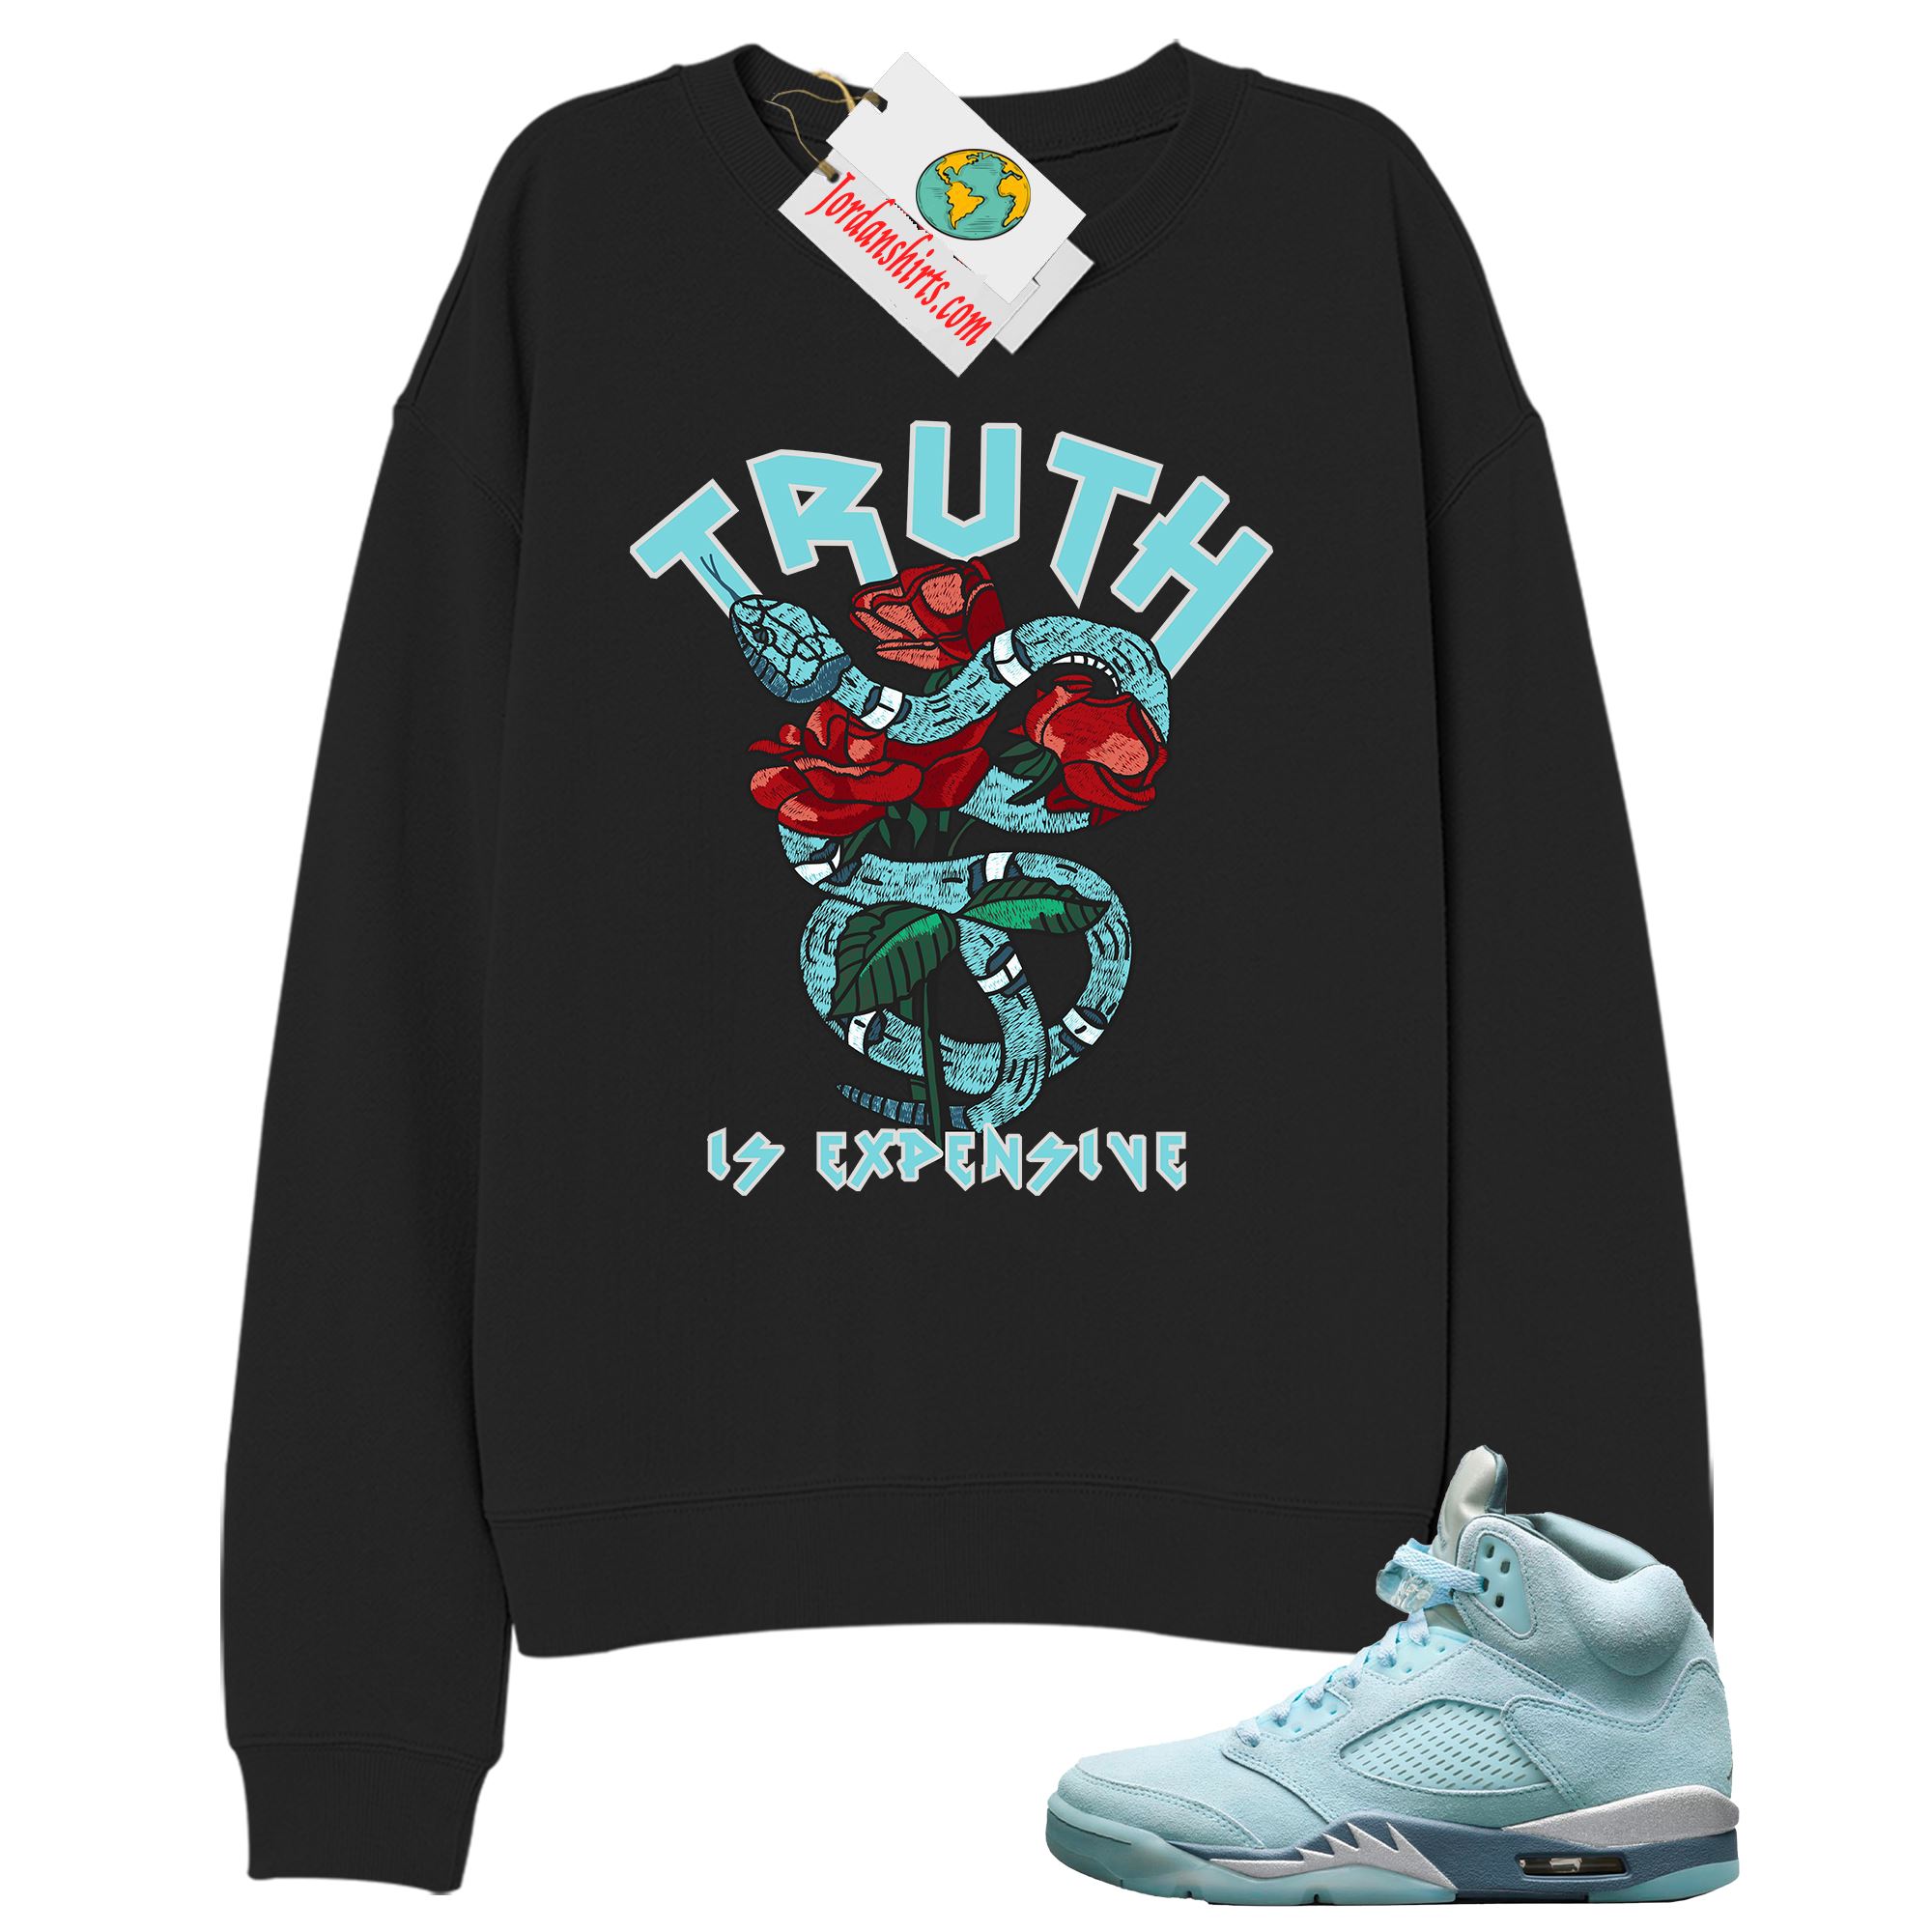 Jordan 5 Sweatshirt, Truth Is Expensive Snake Black Sweatshirt Air Jordan 5 Bluebird 5s Full Size Up To 5xl